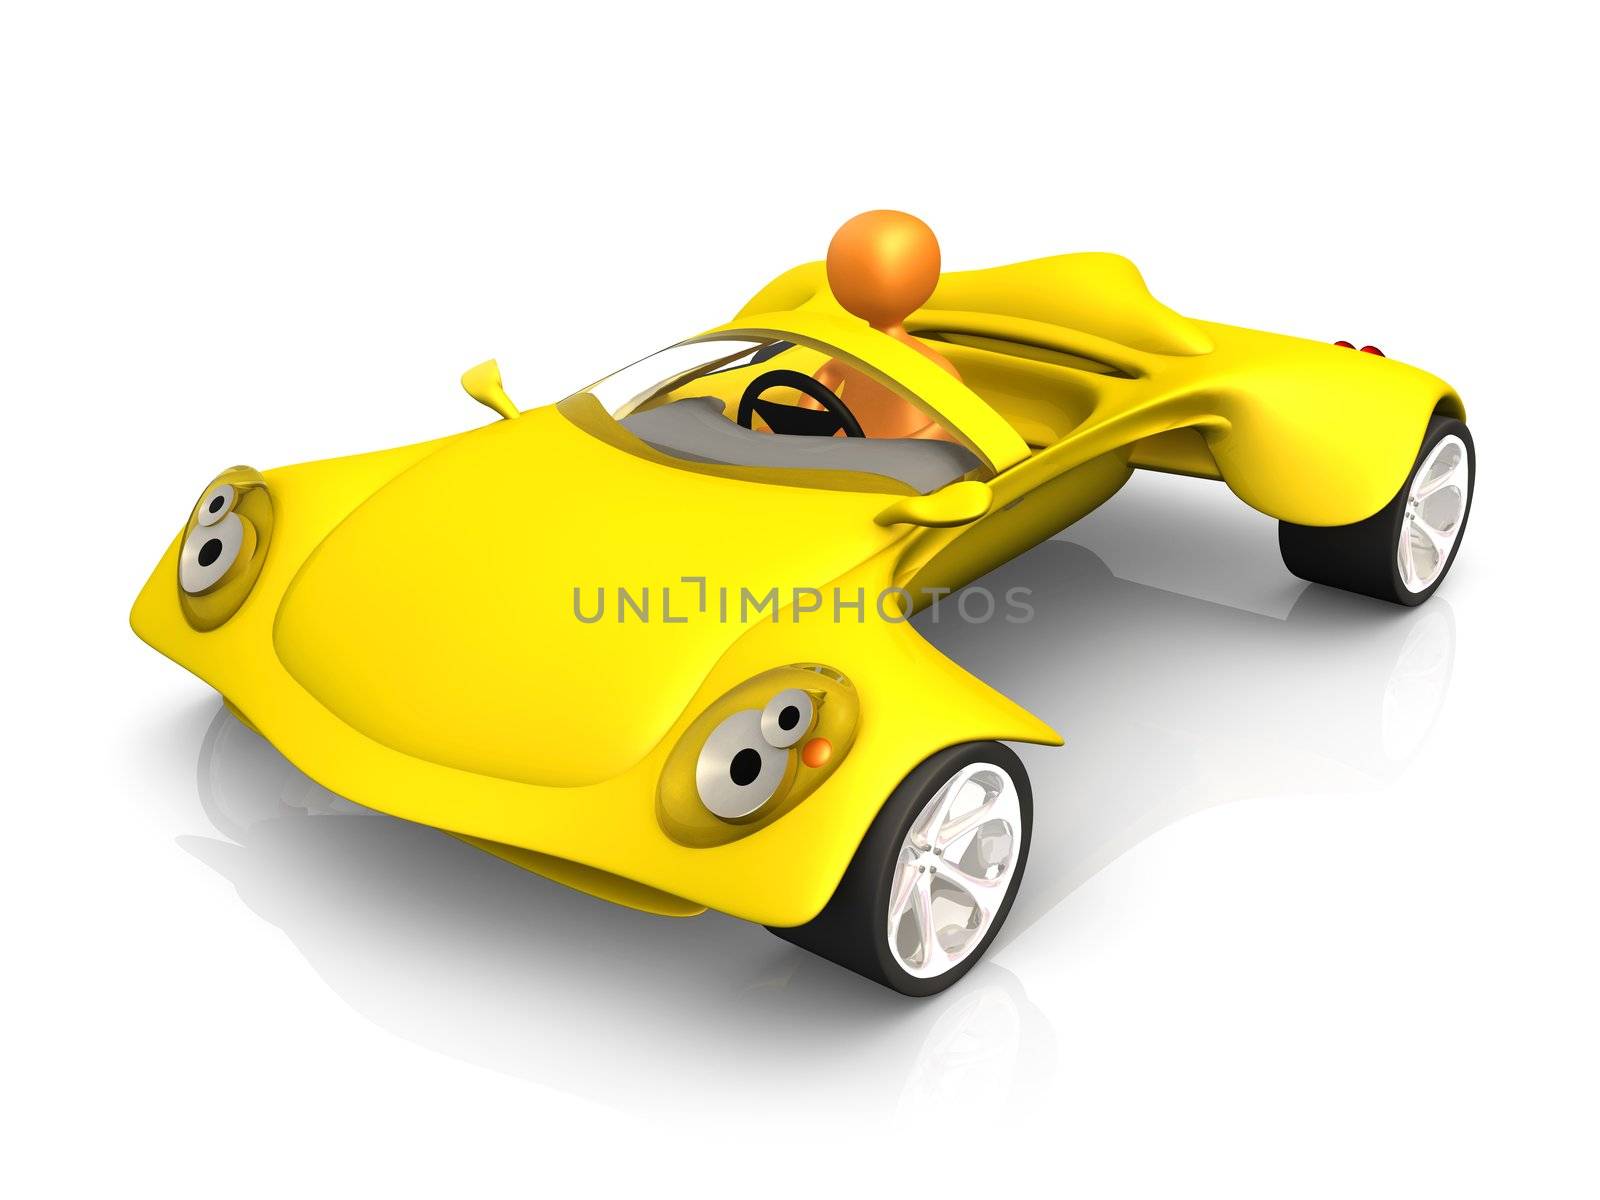 Concept Car by 3pod